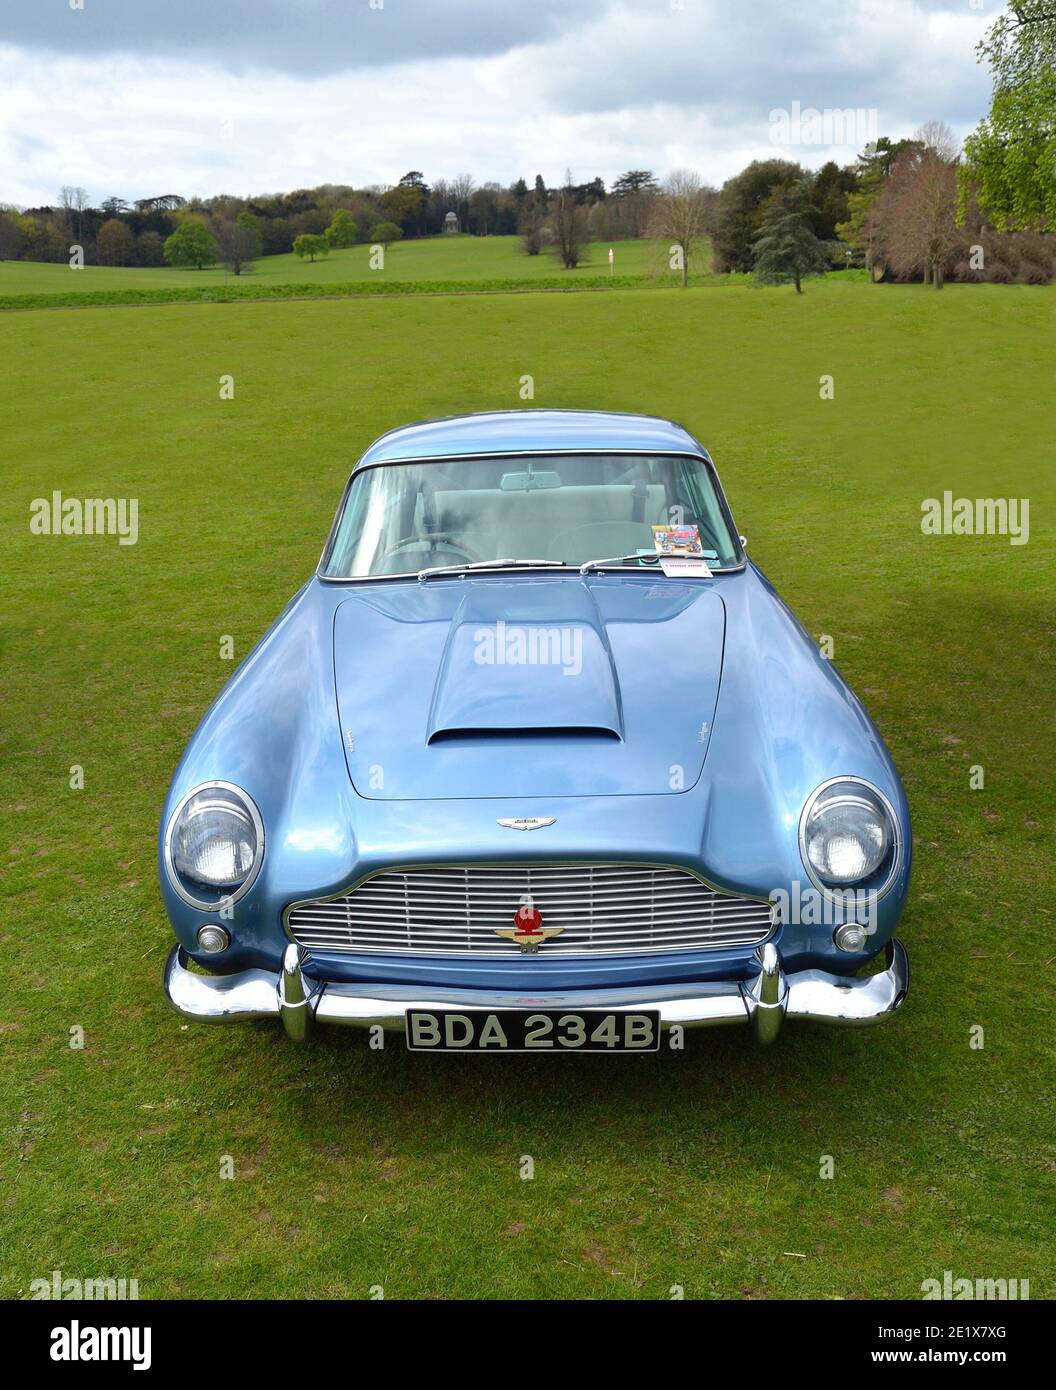 Classic Light Blue Aston Martin DB5 sports car parked on grass. Stock Photo